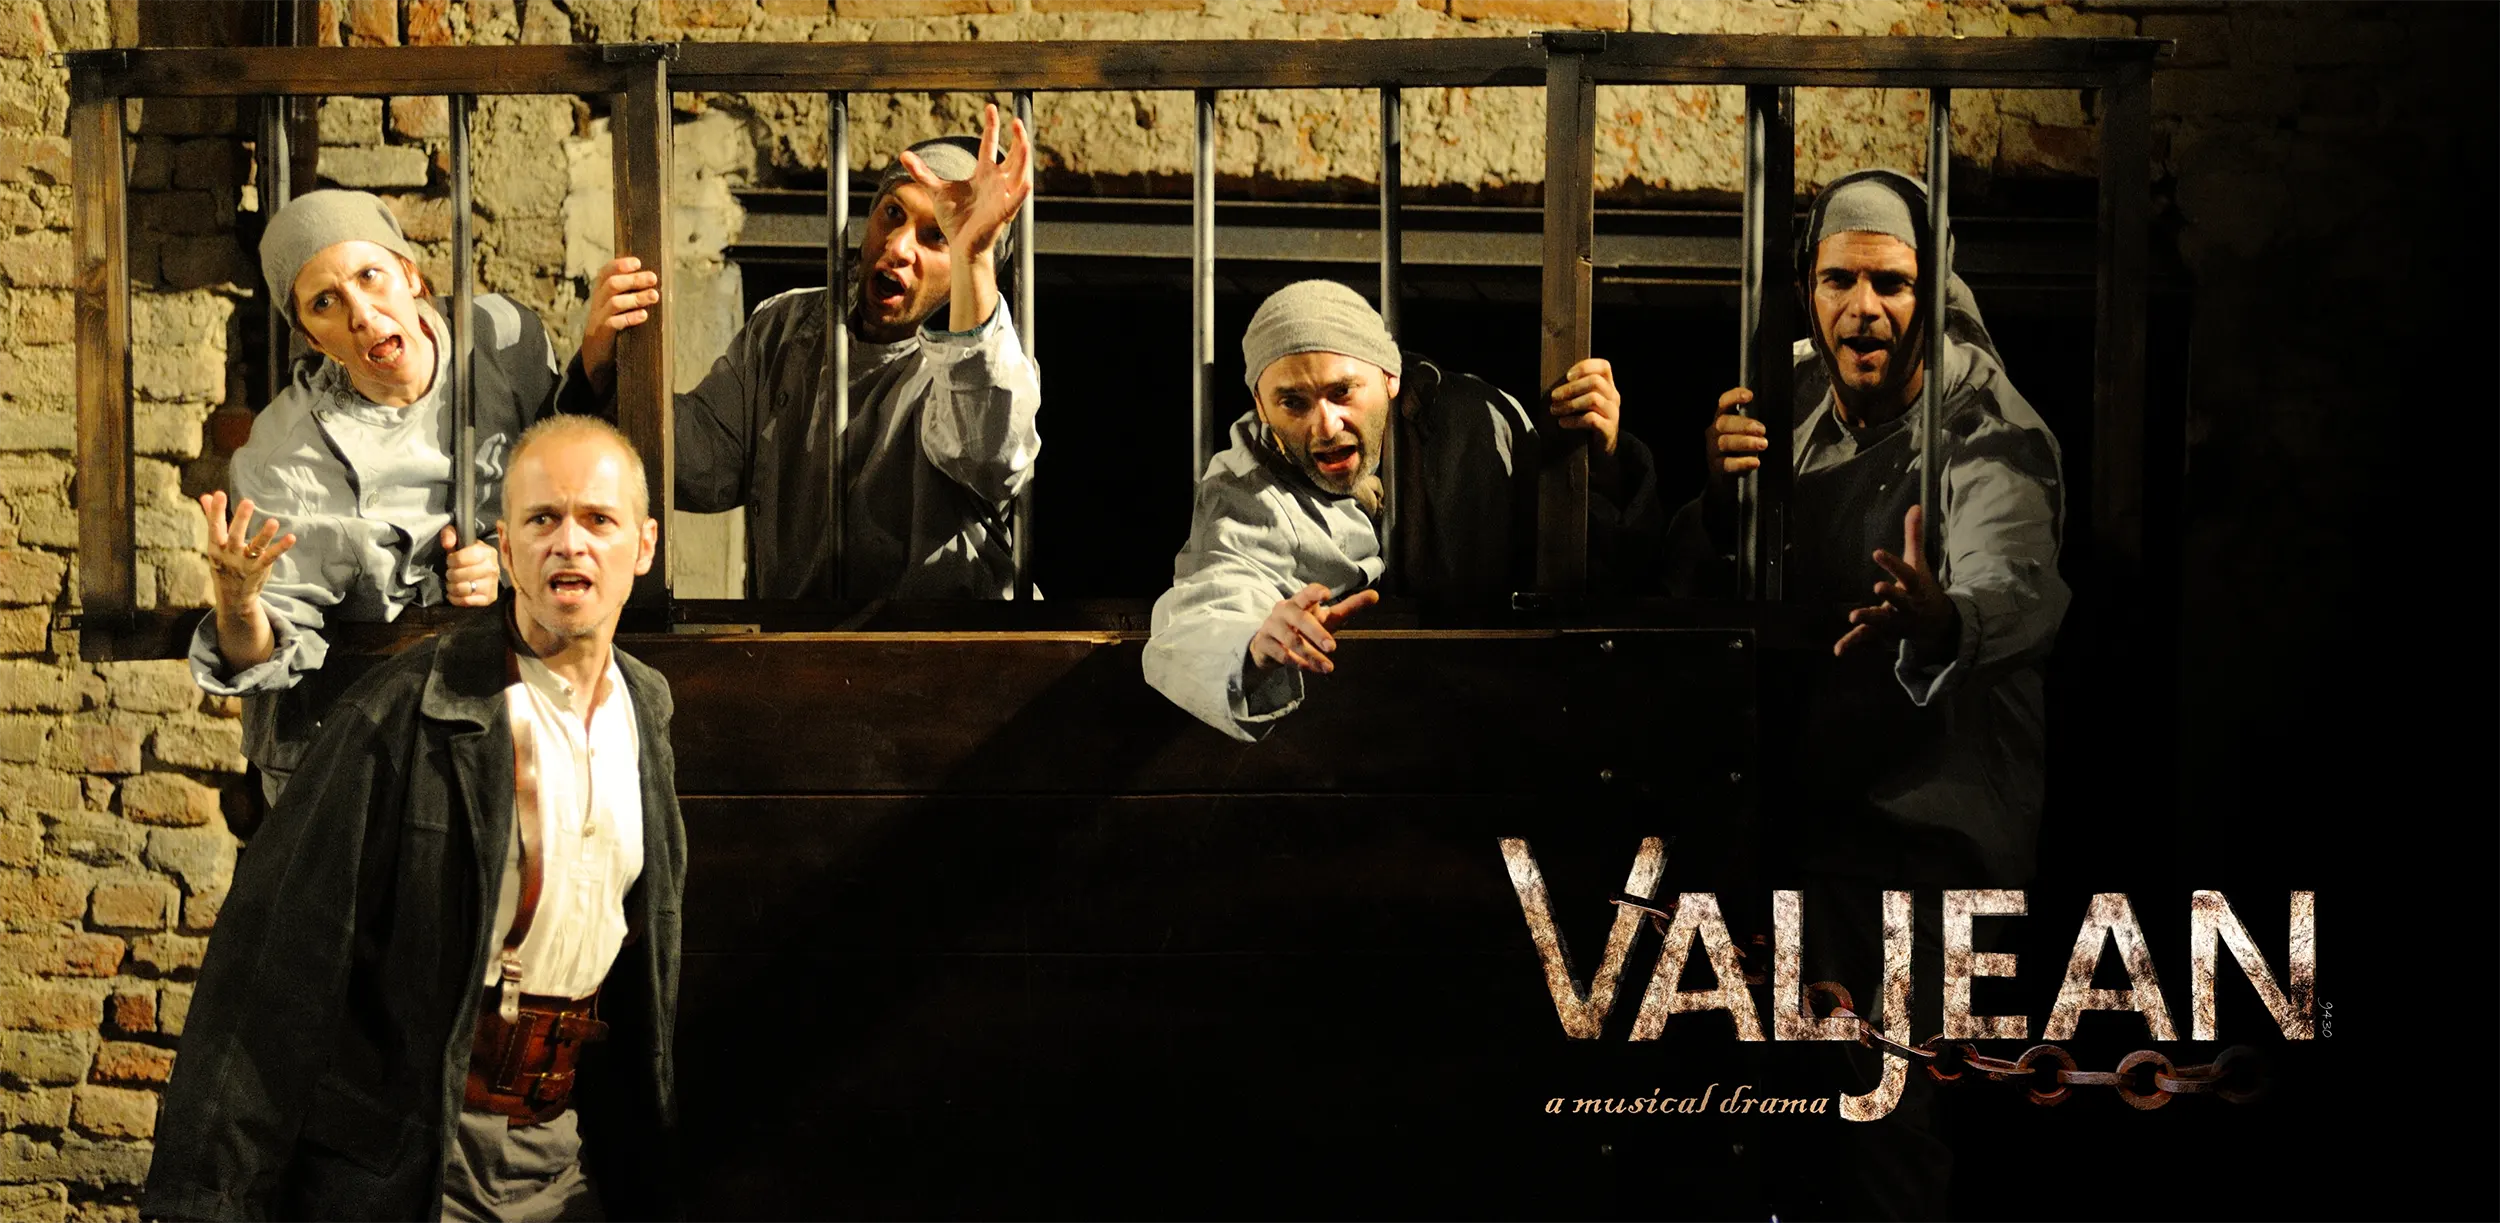 Gruppo artisti Musical Off Valjean